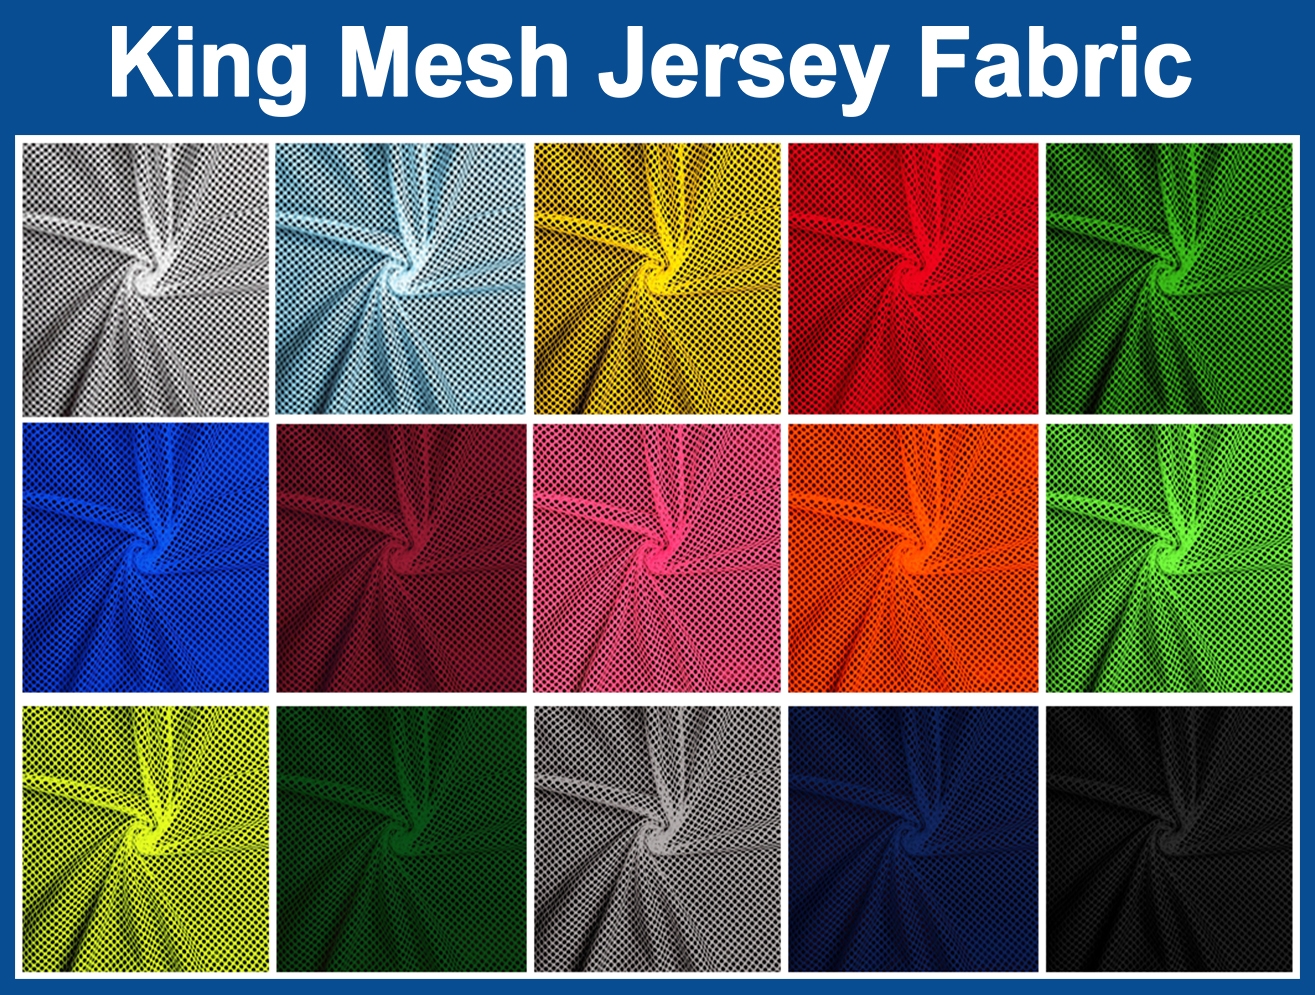 King Mesh Jersey Fabric